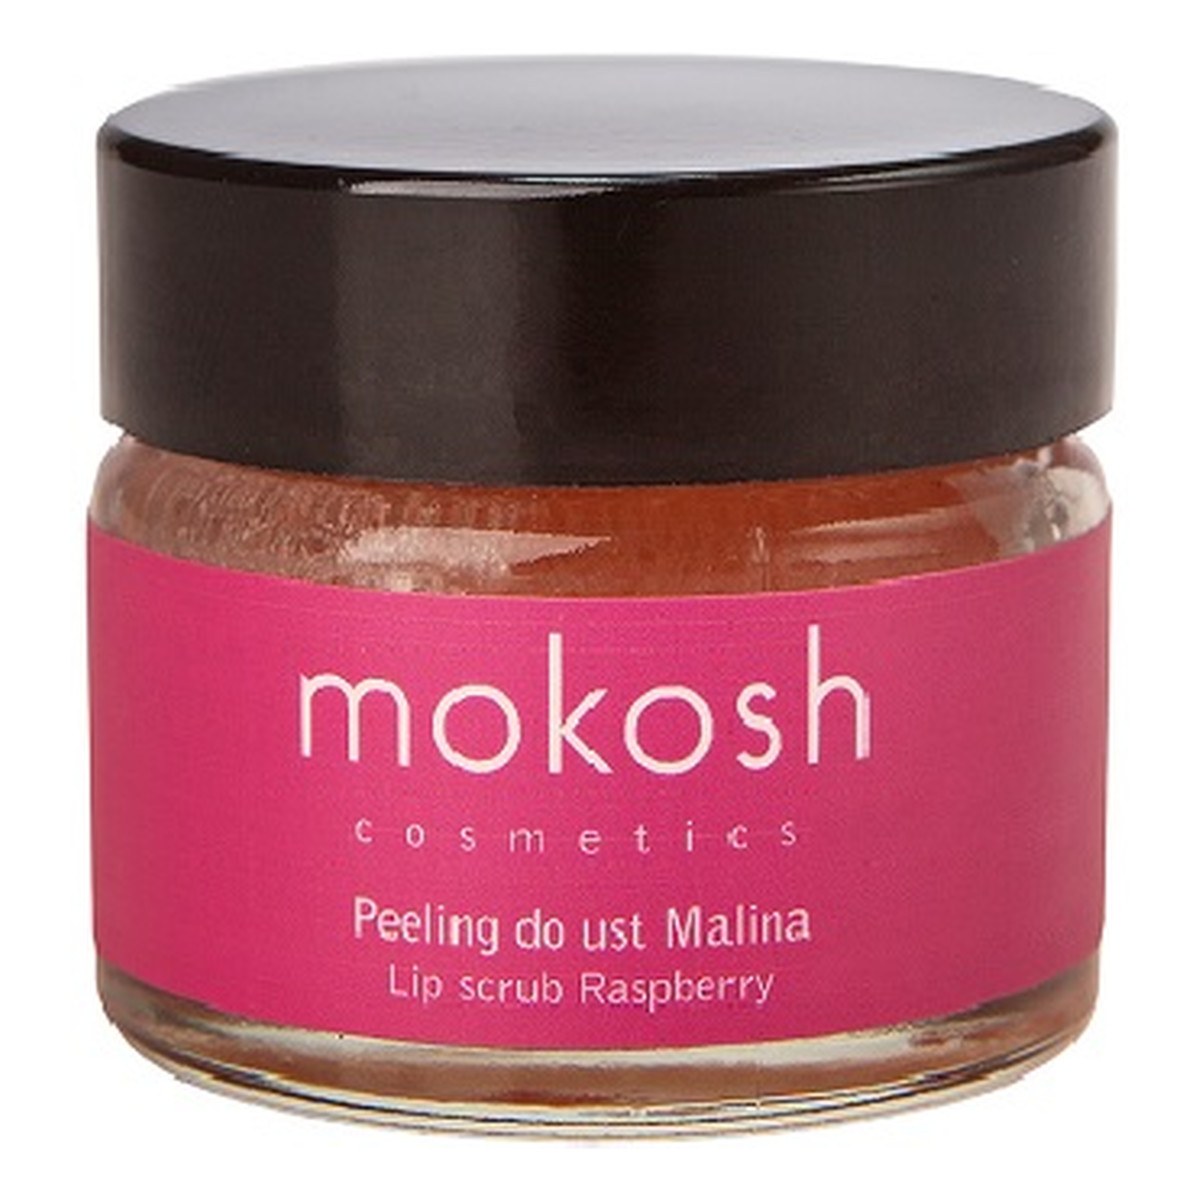 Mokosh Lip Scrub Raspberry peeling do ust Malina 15ml